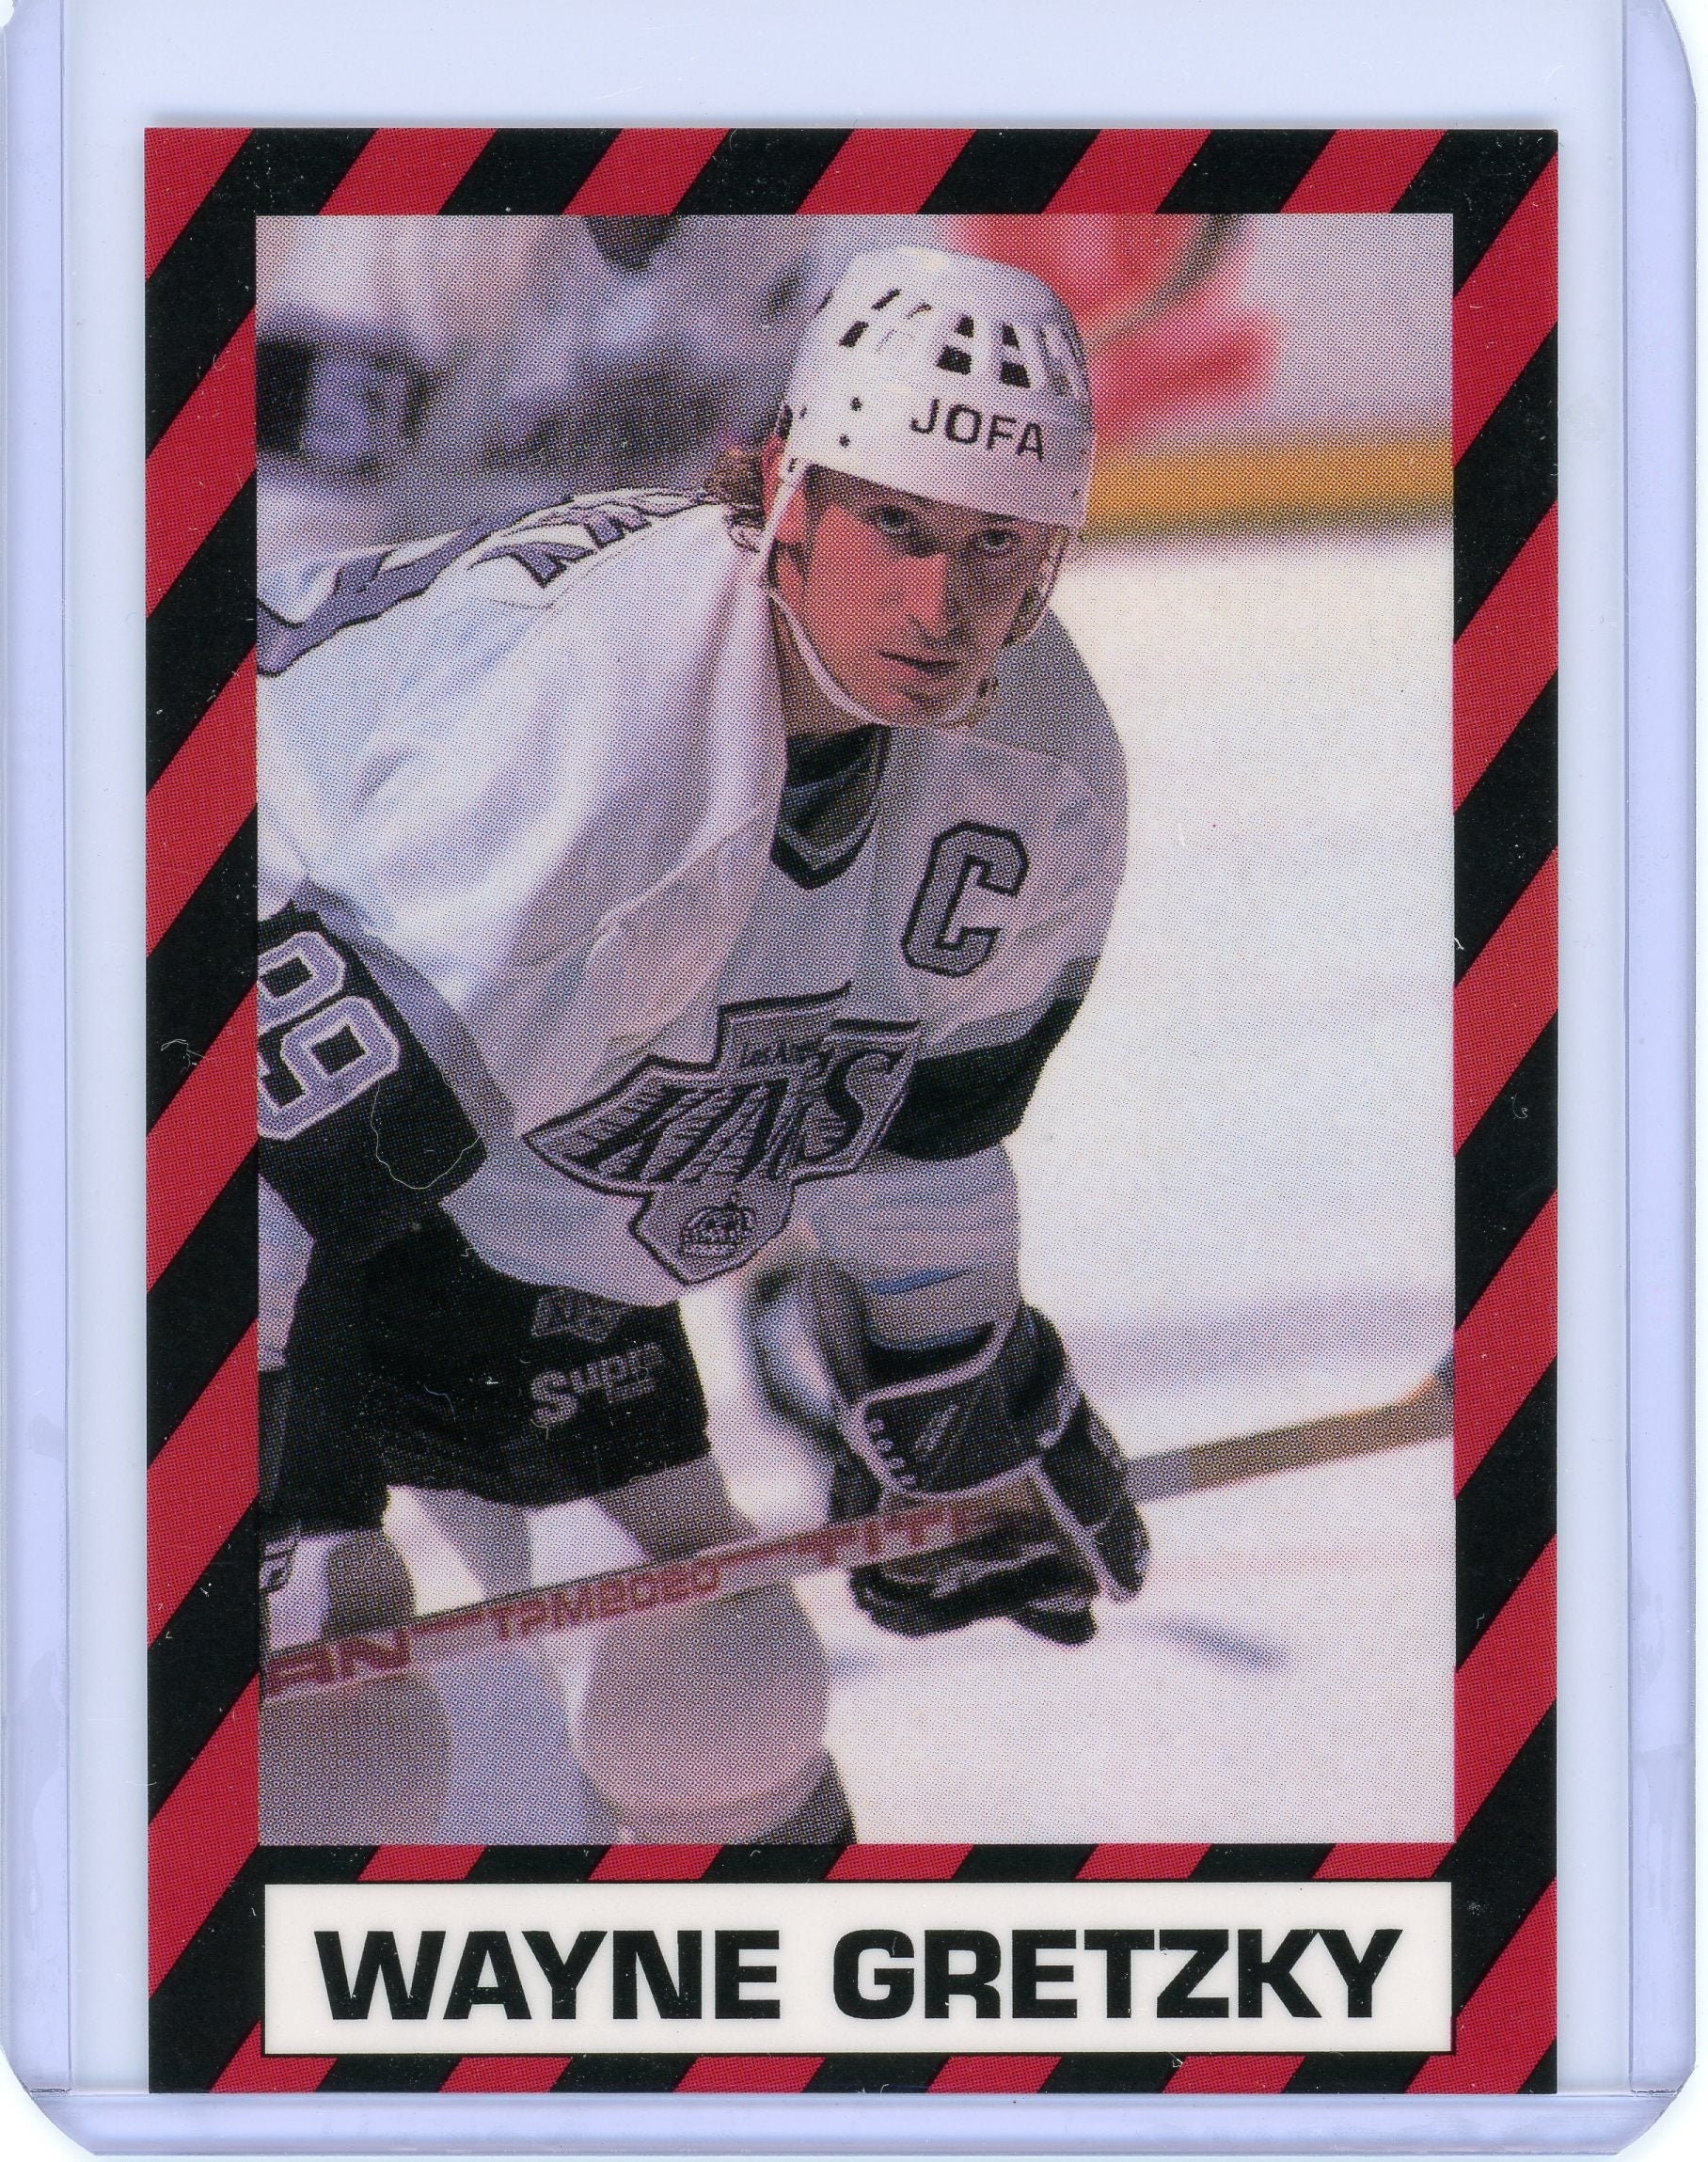 Wayne Gretzky (HOF) 1981 Topps #16 PSA 8 Ice Hockey Card